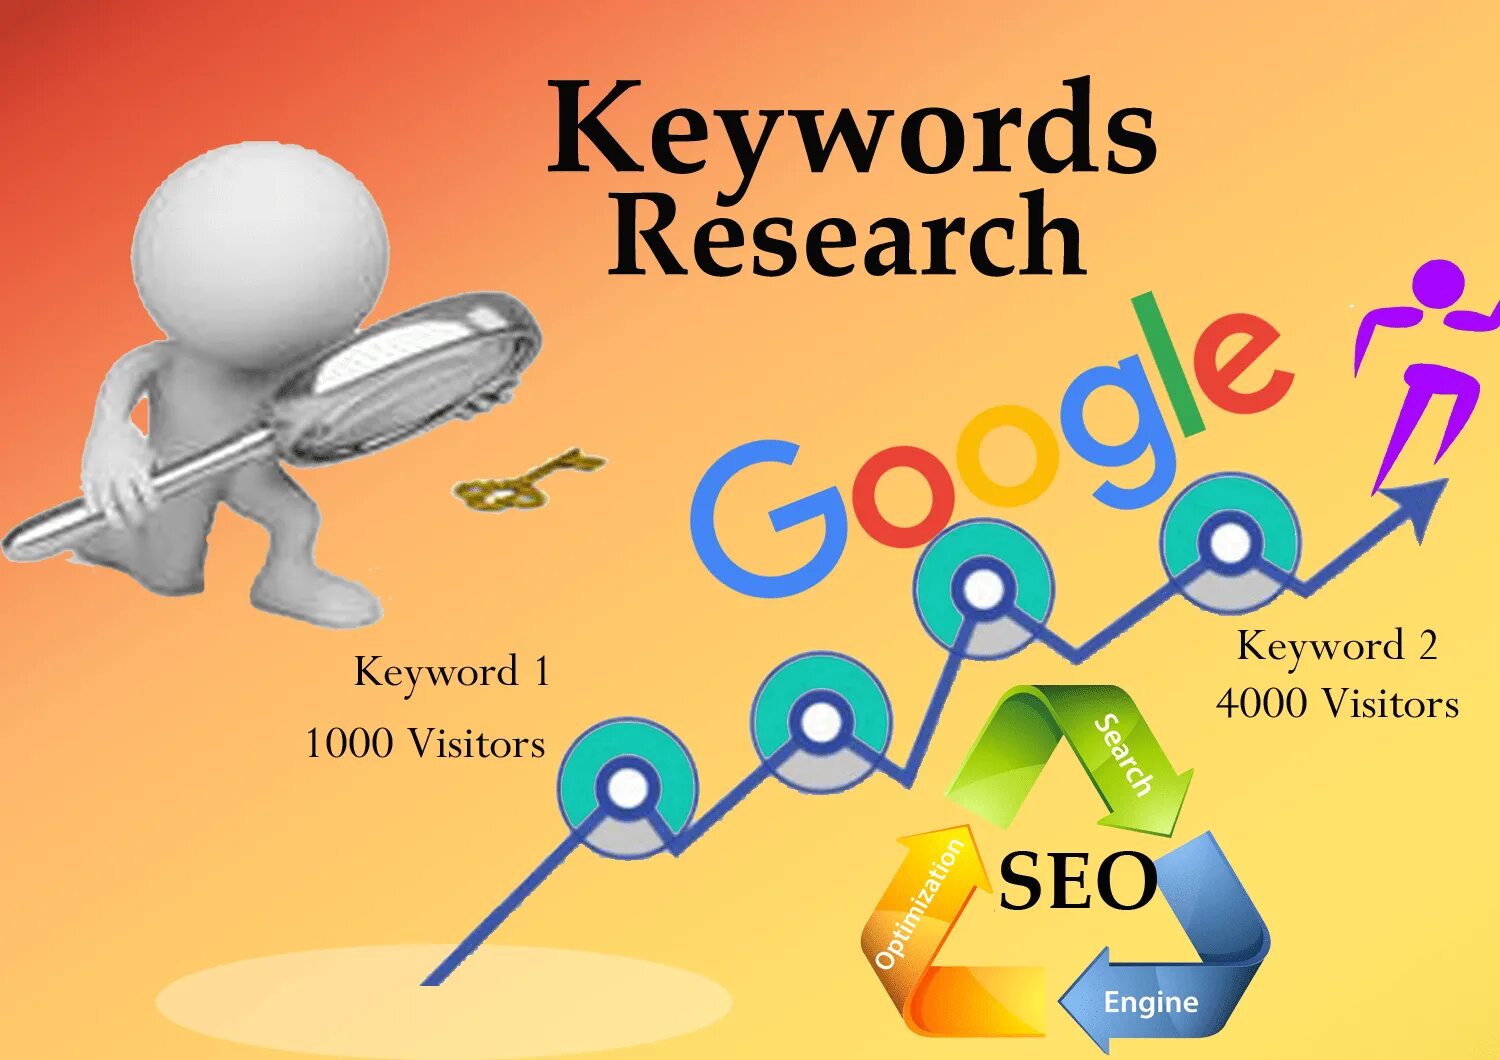 Keyword research. SEO keyword research. Картинка к слову research. Картинки на тему SEO. Keywords key